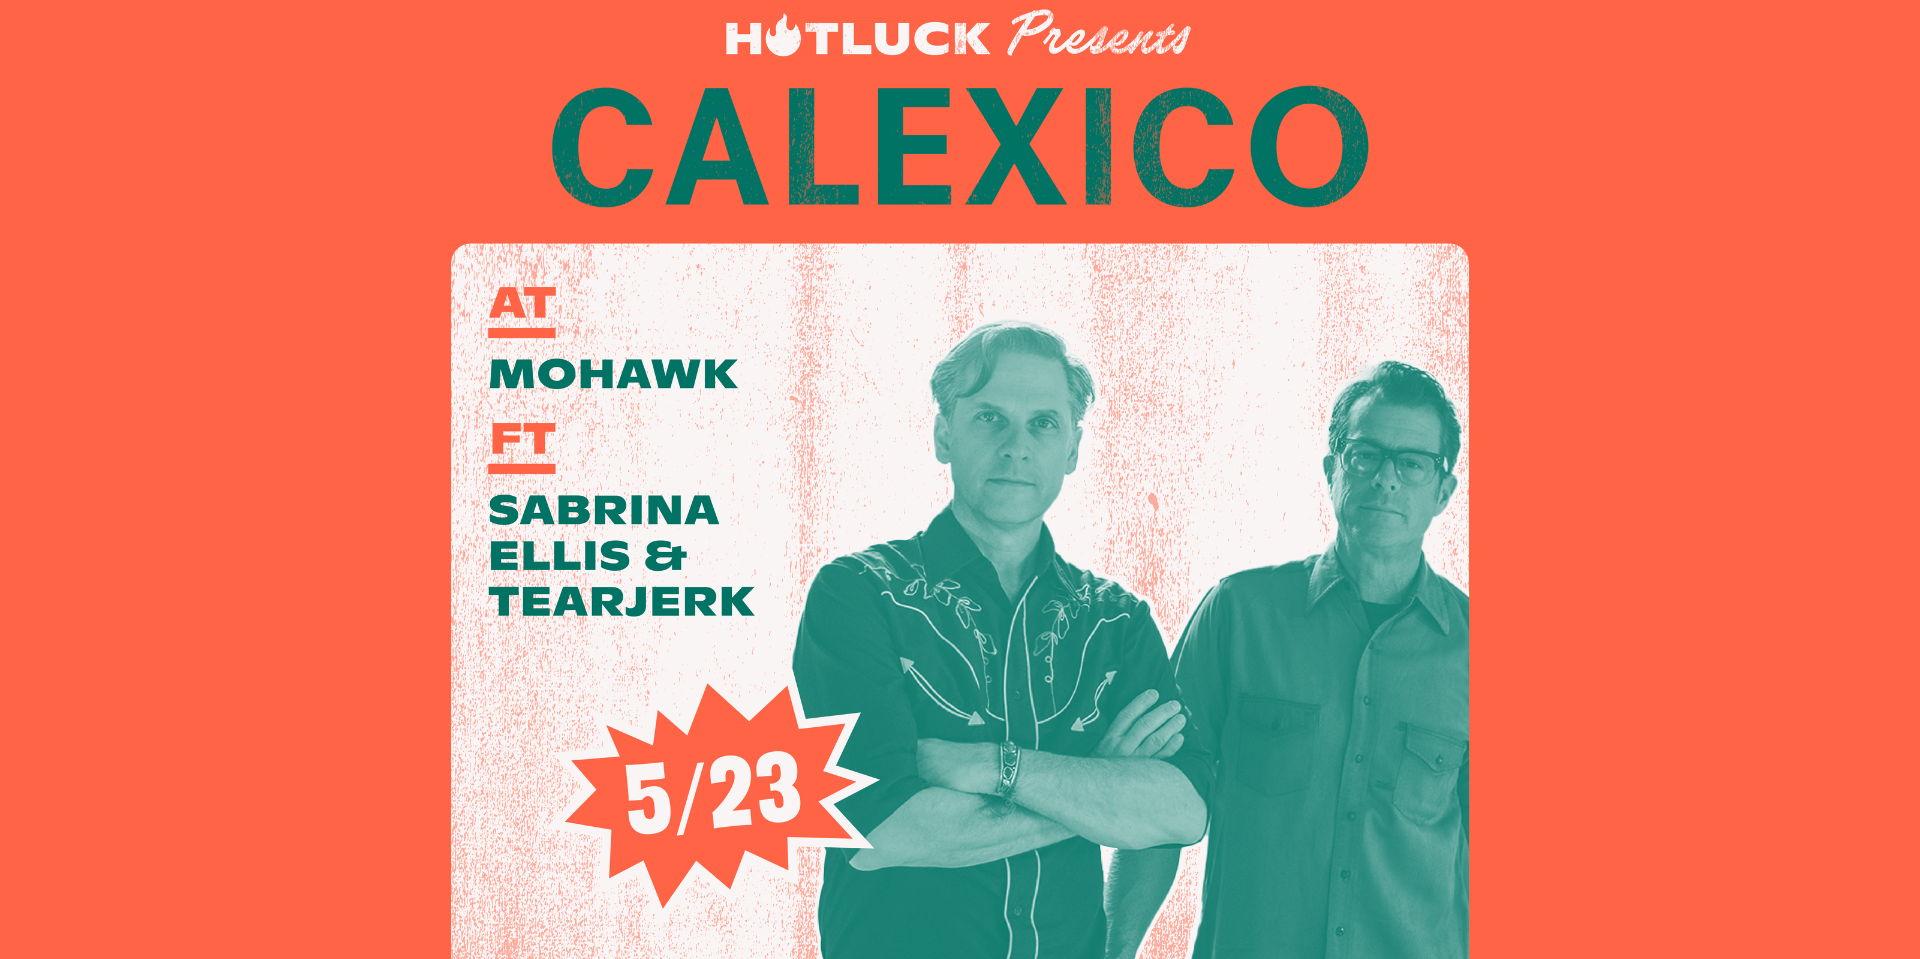 Hotluck Presents:Calexico w/ Tearjerk & Sabrina Ellis at Mohawk on 5/23 promotional image